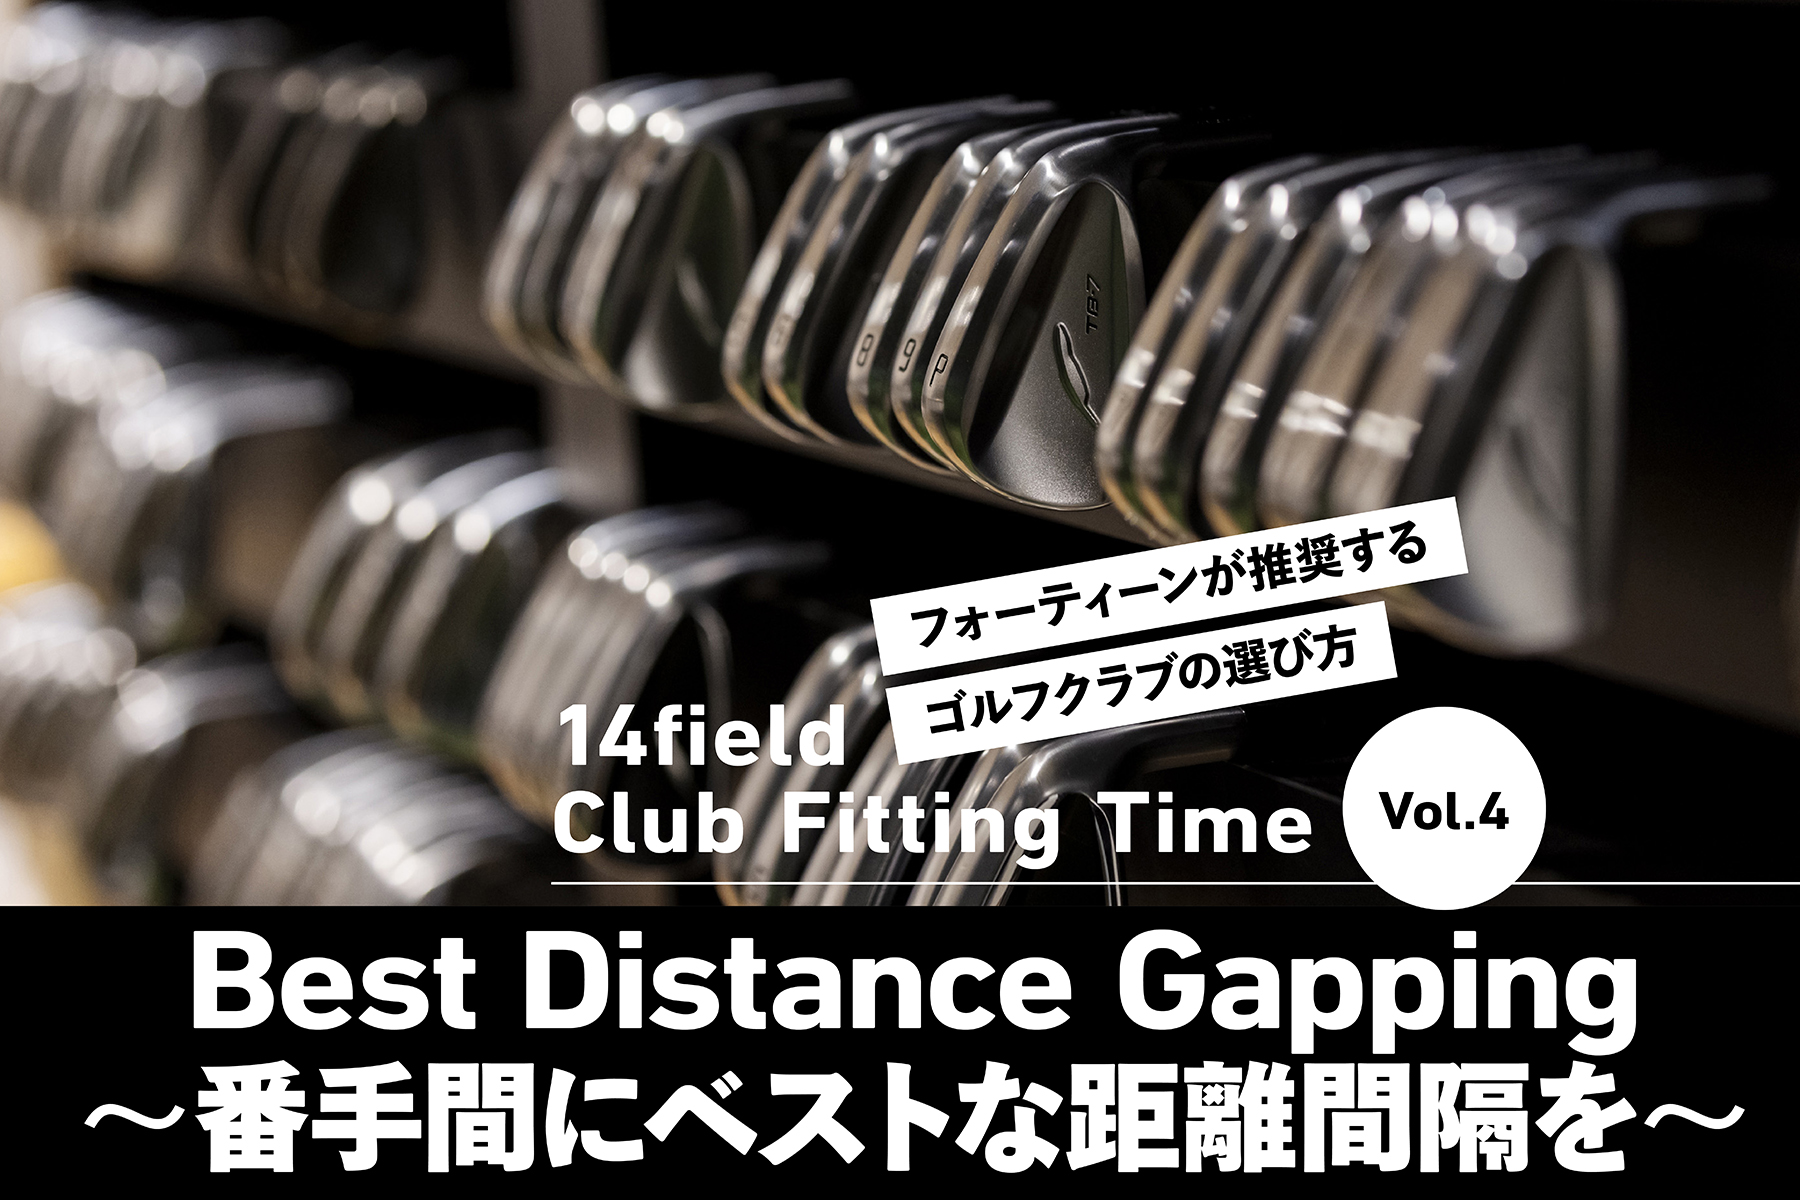 14field Club Fitting Time
Vol.4
Best Distance Gapping
〜番手間にベストな距離間隔を〜